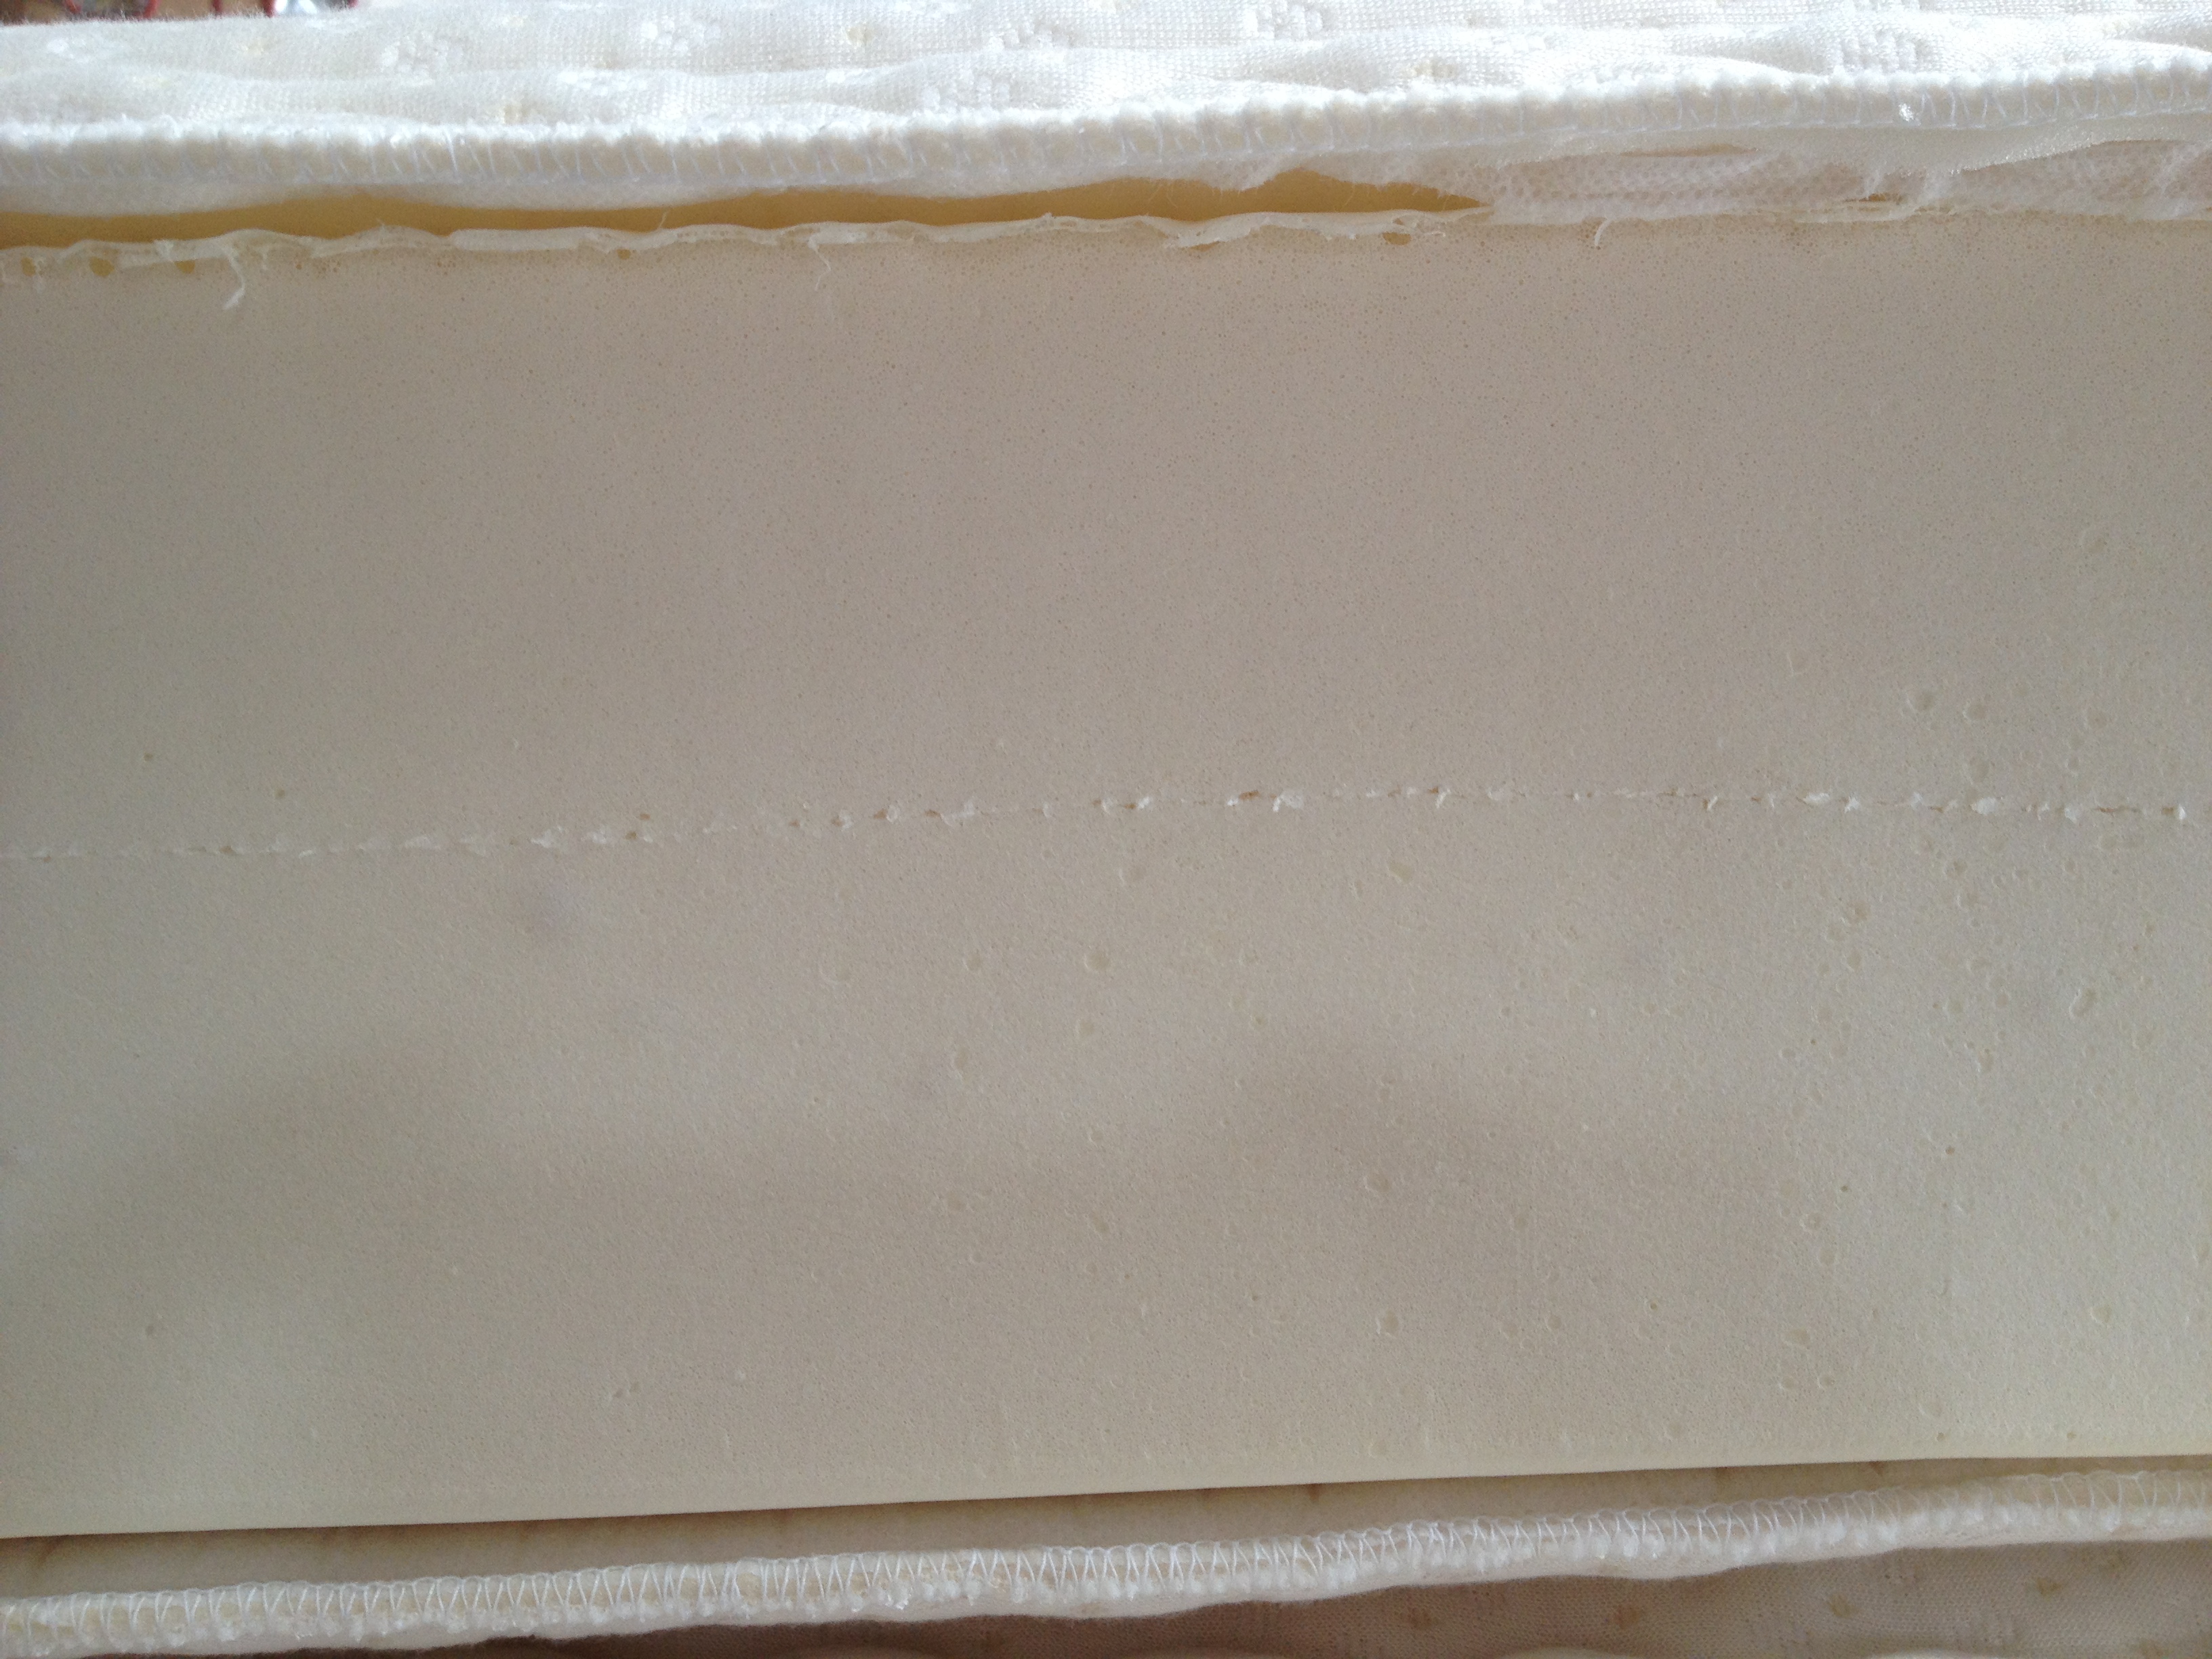 Yelp latex mattress